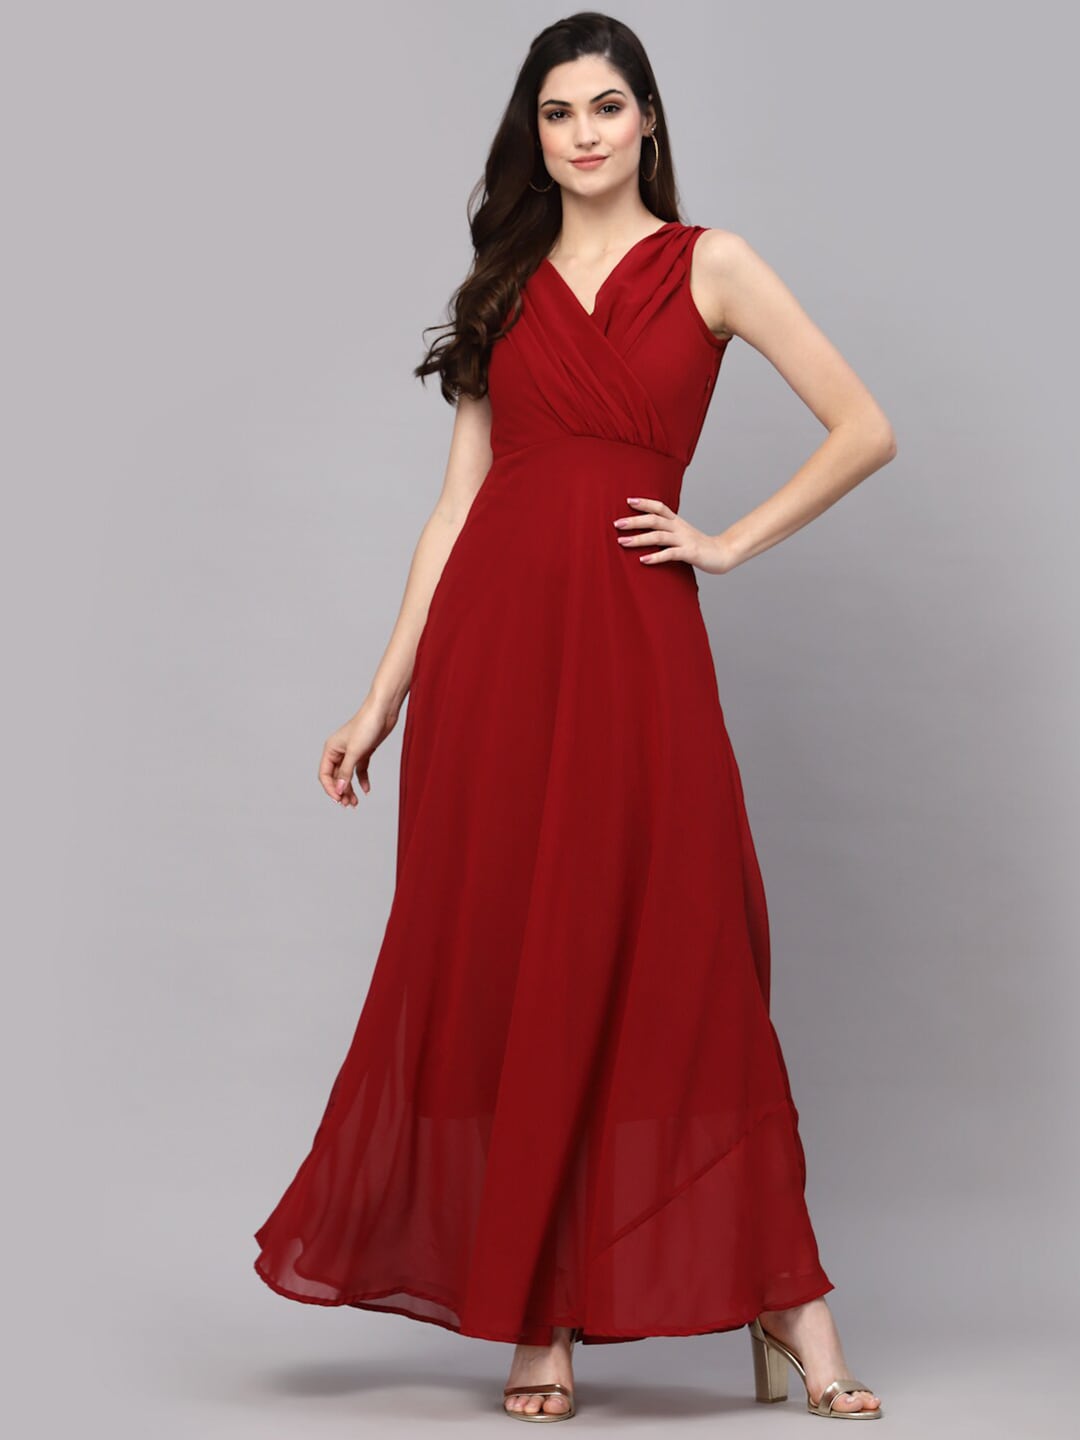 aayu Georgette Maxi Wrap Dress Price in India